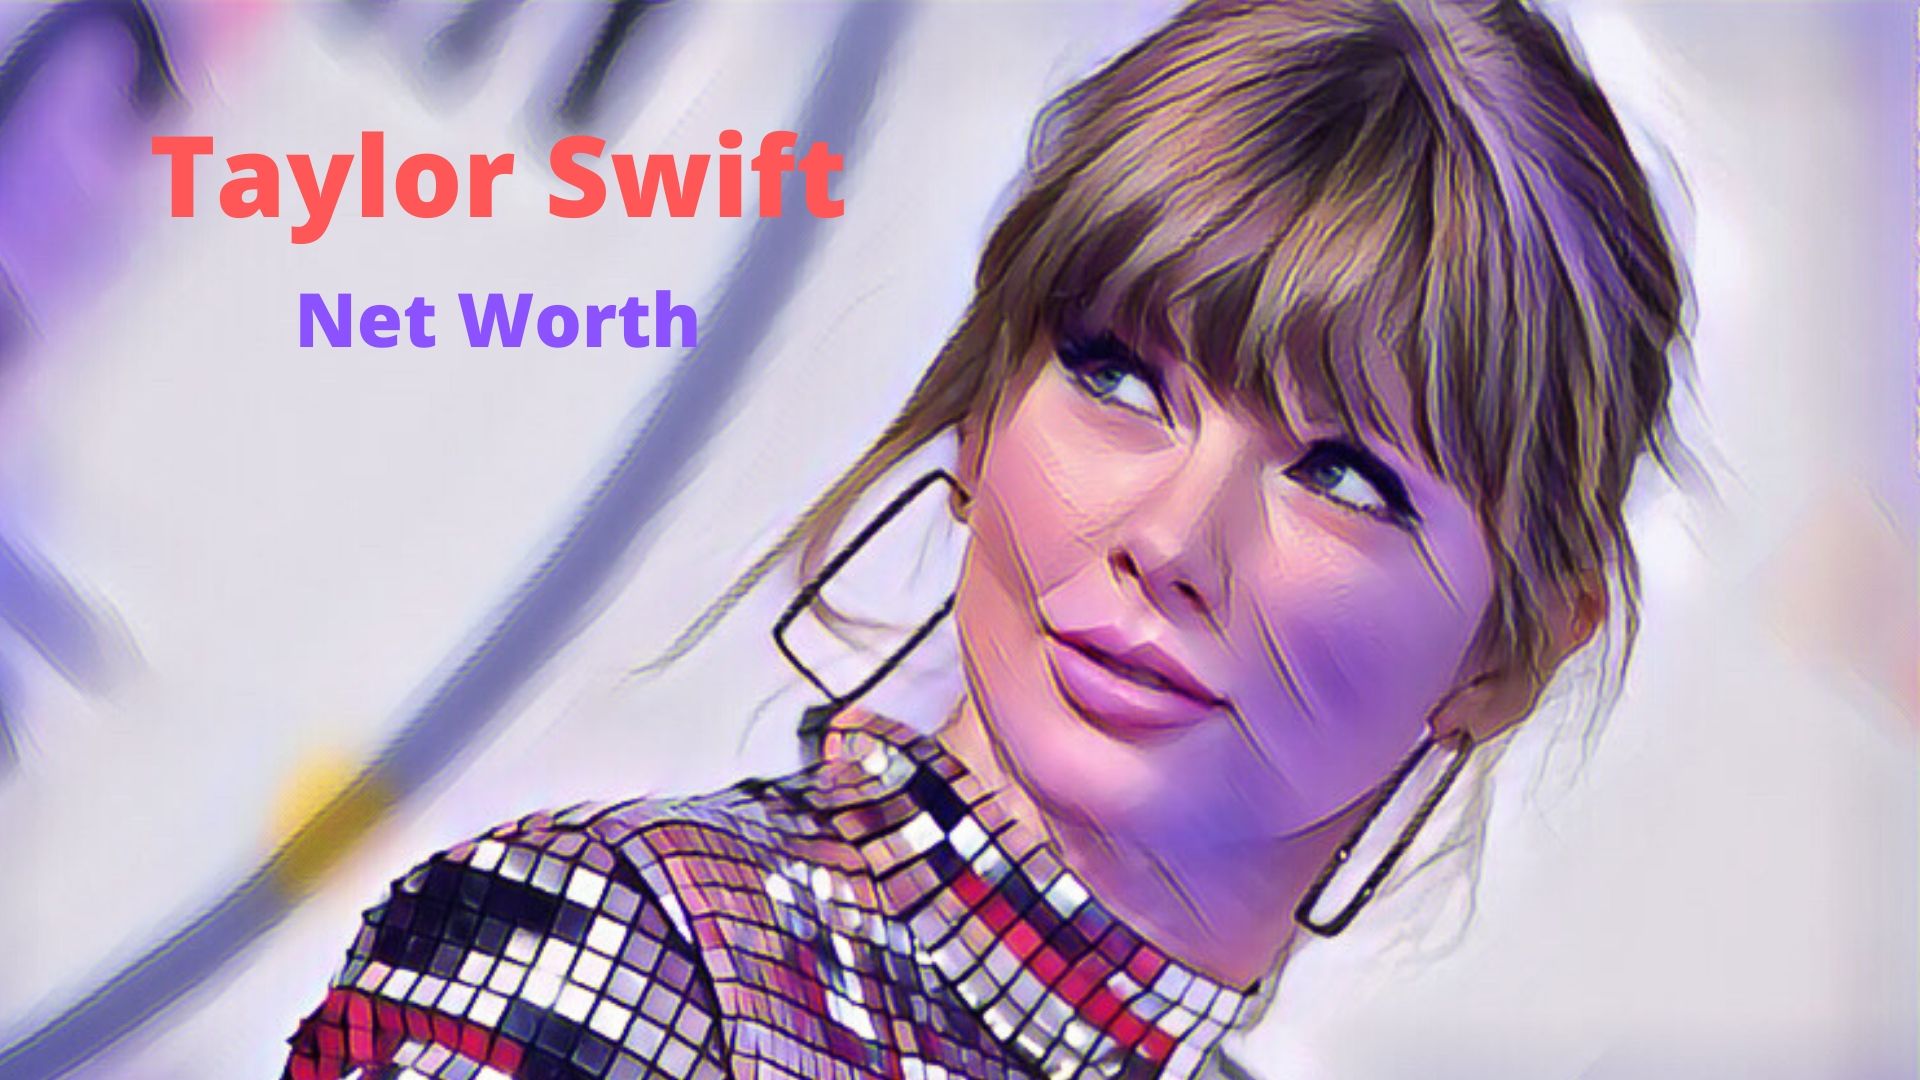 Taylor swift net worth